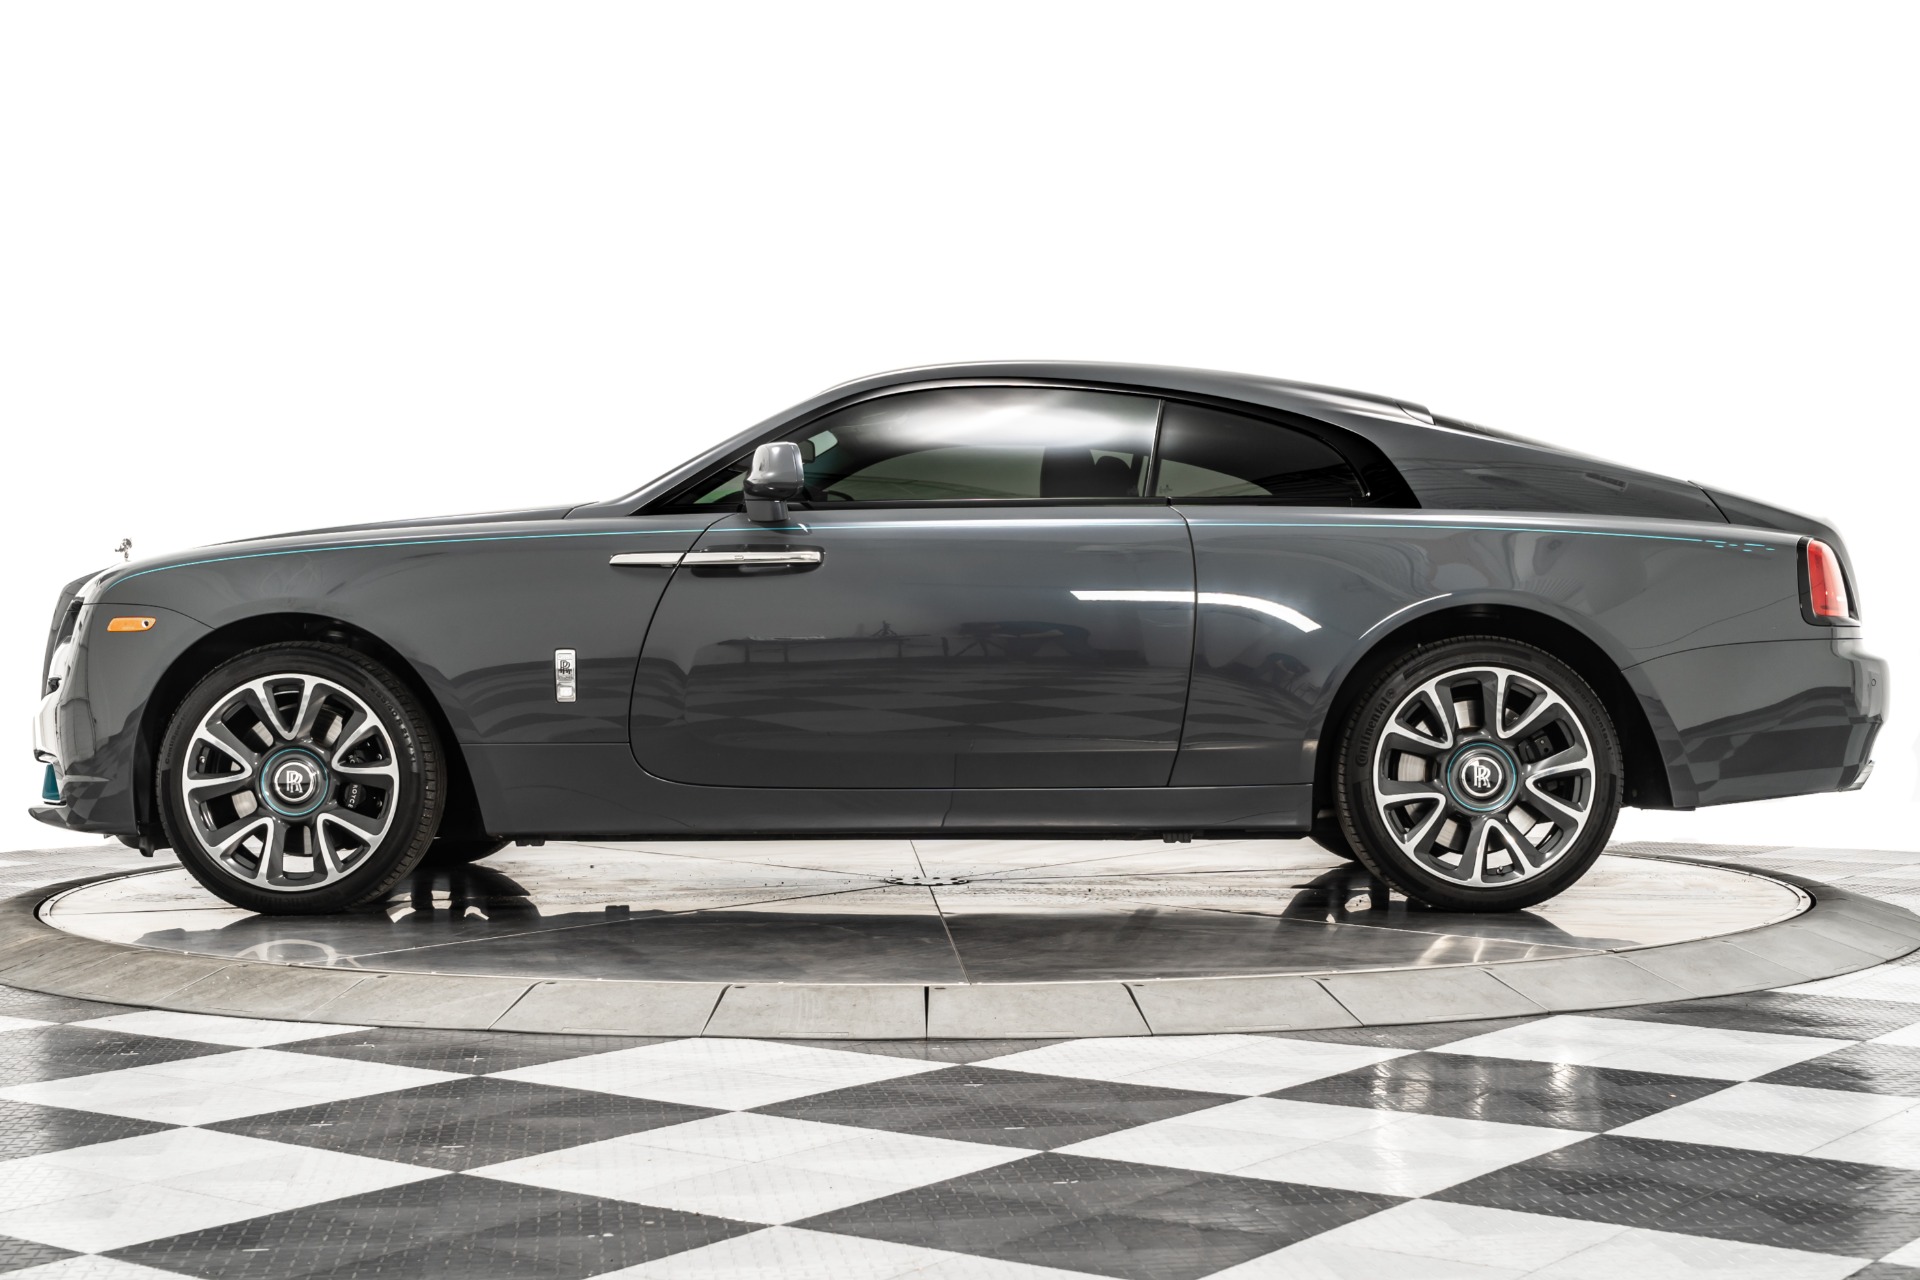 2013 Rolls Royce Wraith GreySilver Two Tone on BrownWood  Prestige  Image Motorcars